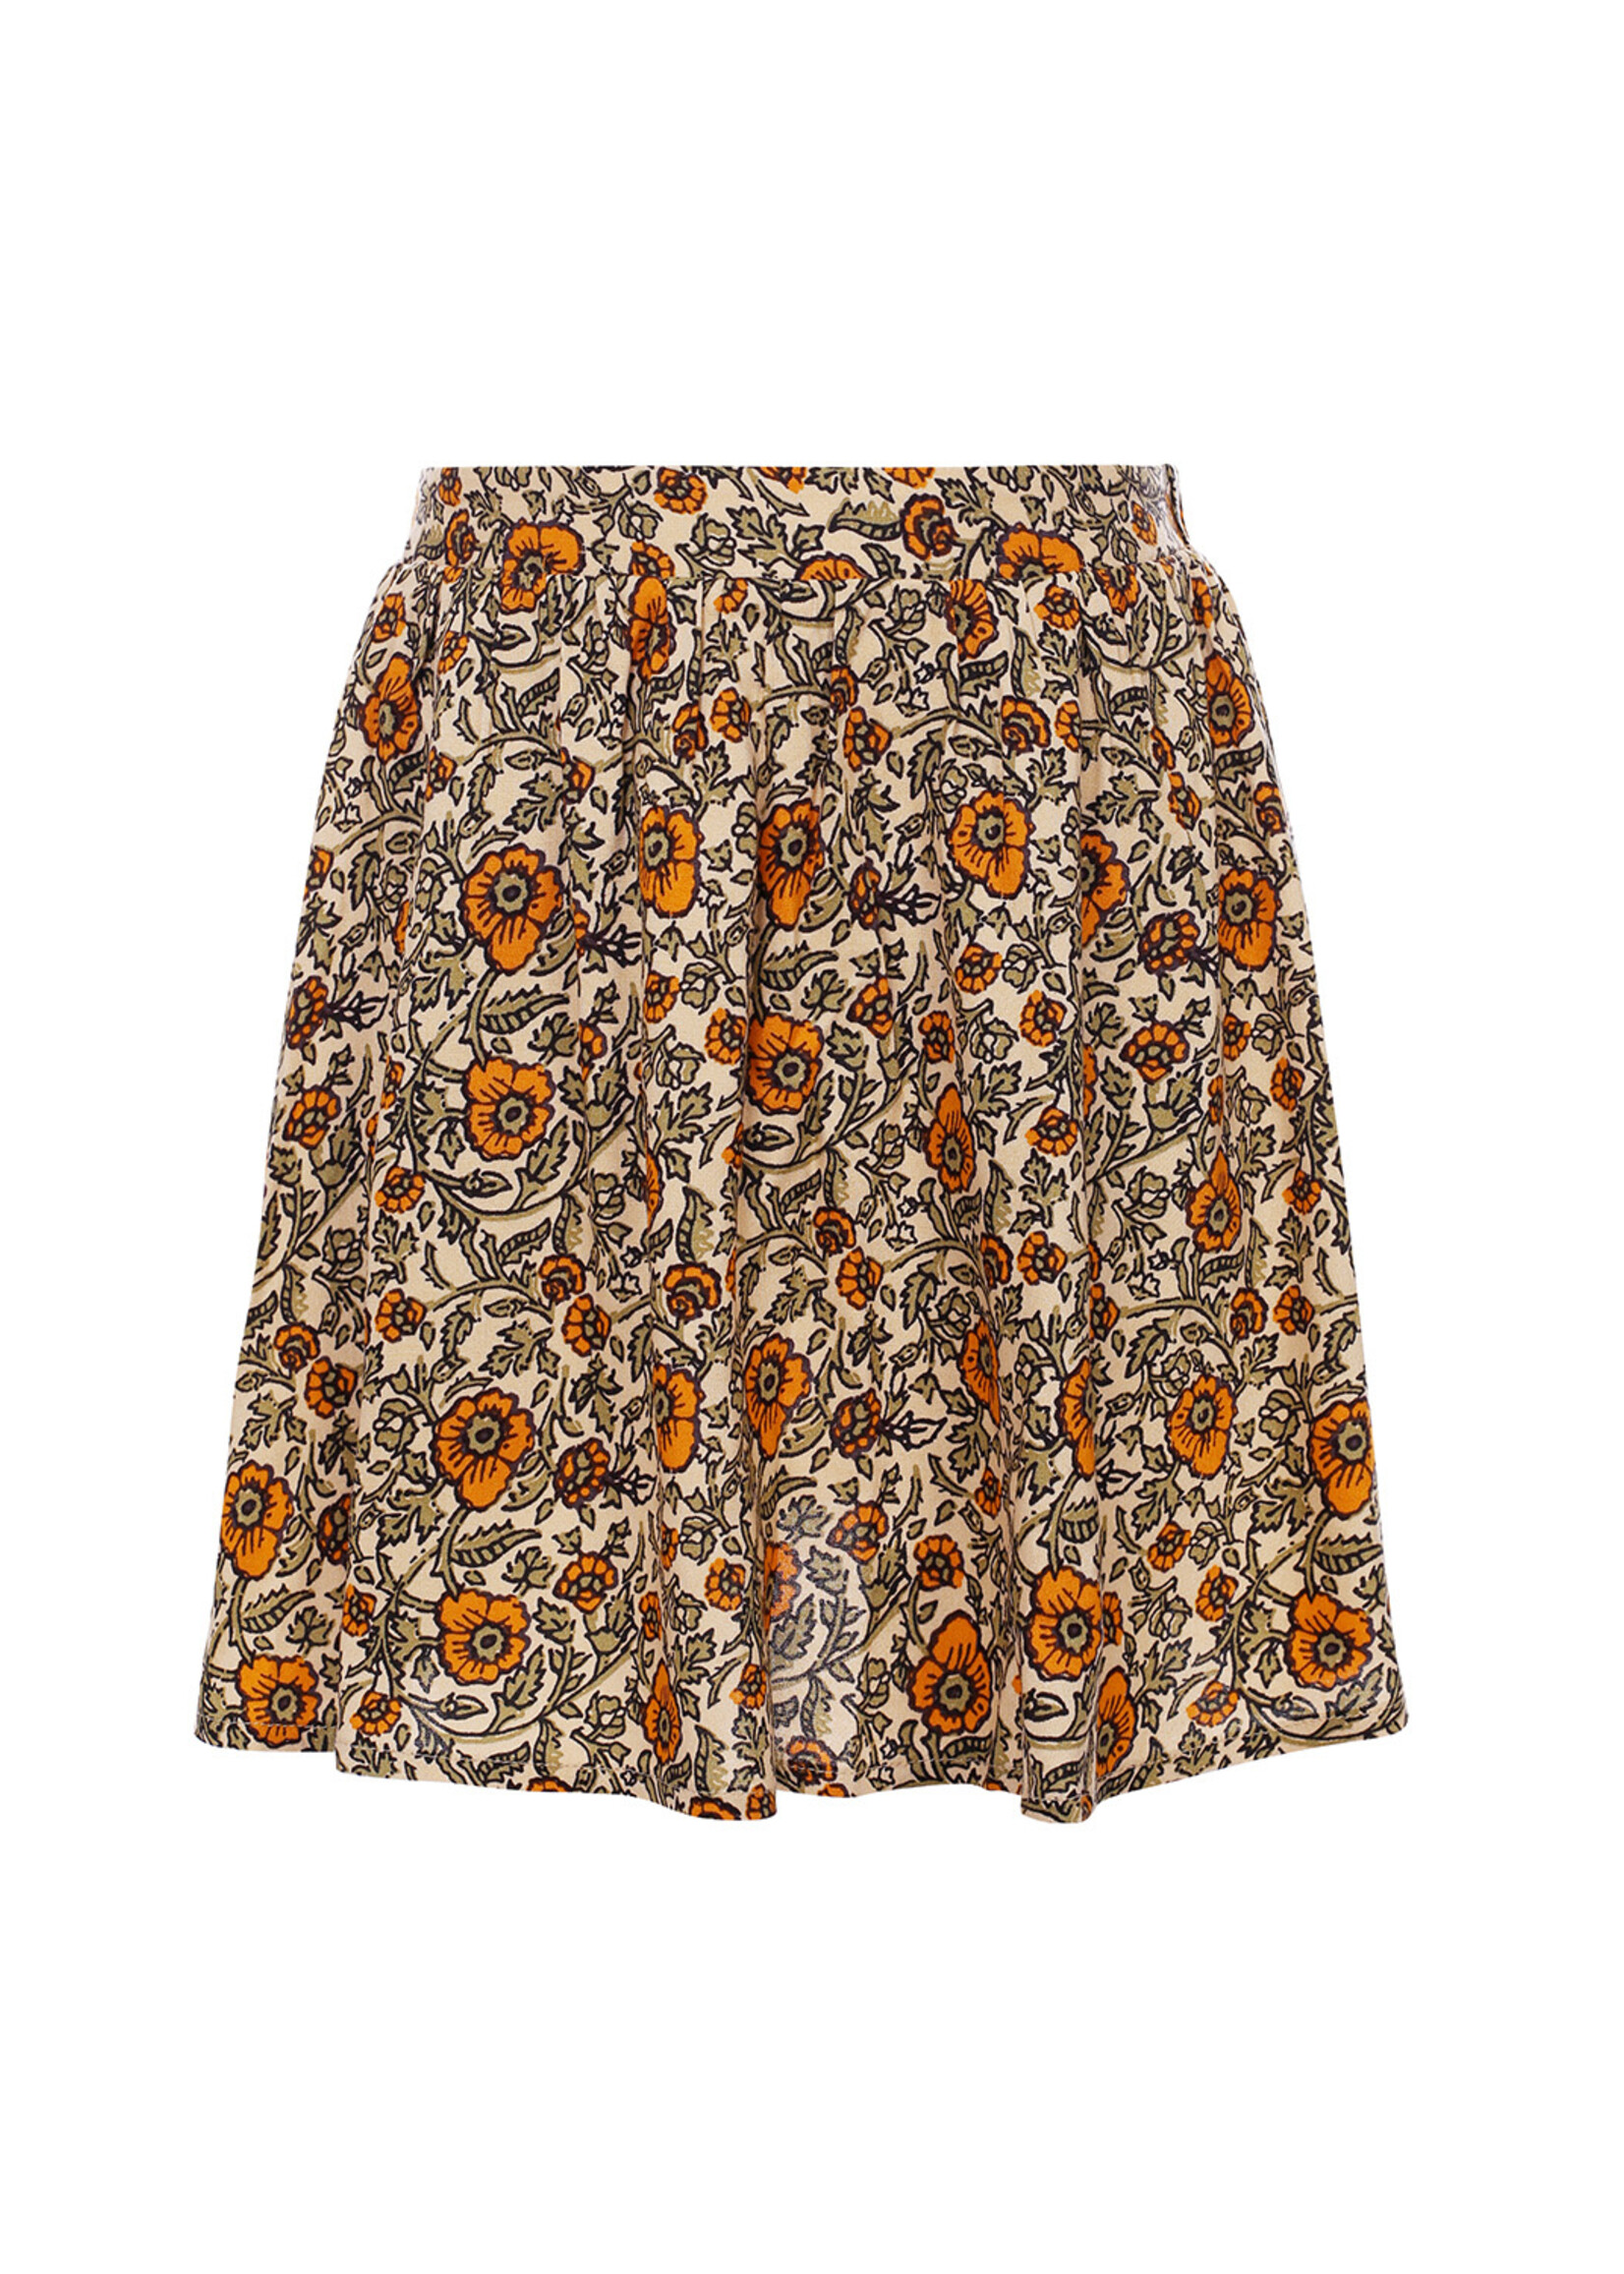 LOOXS Little Little skirt Orange Floral